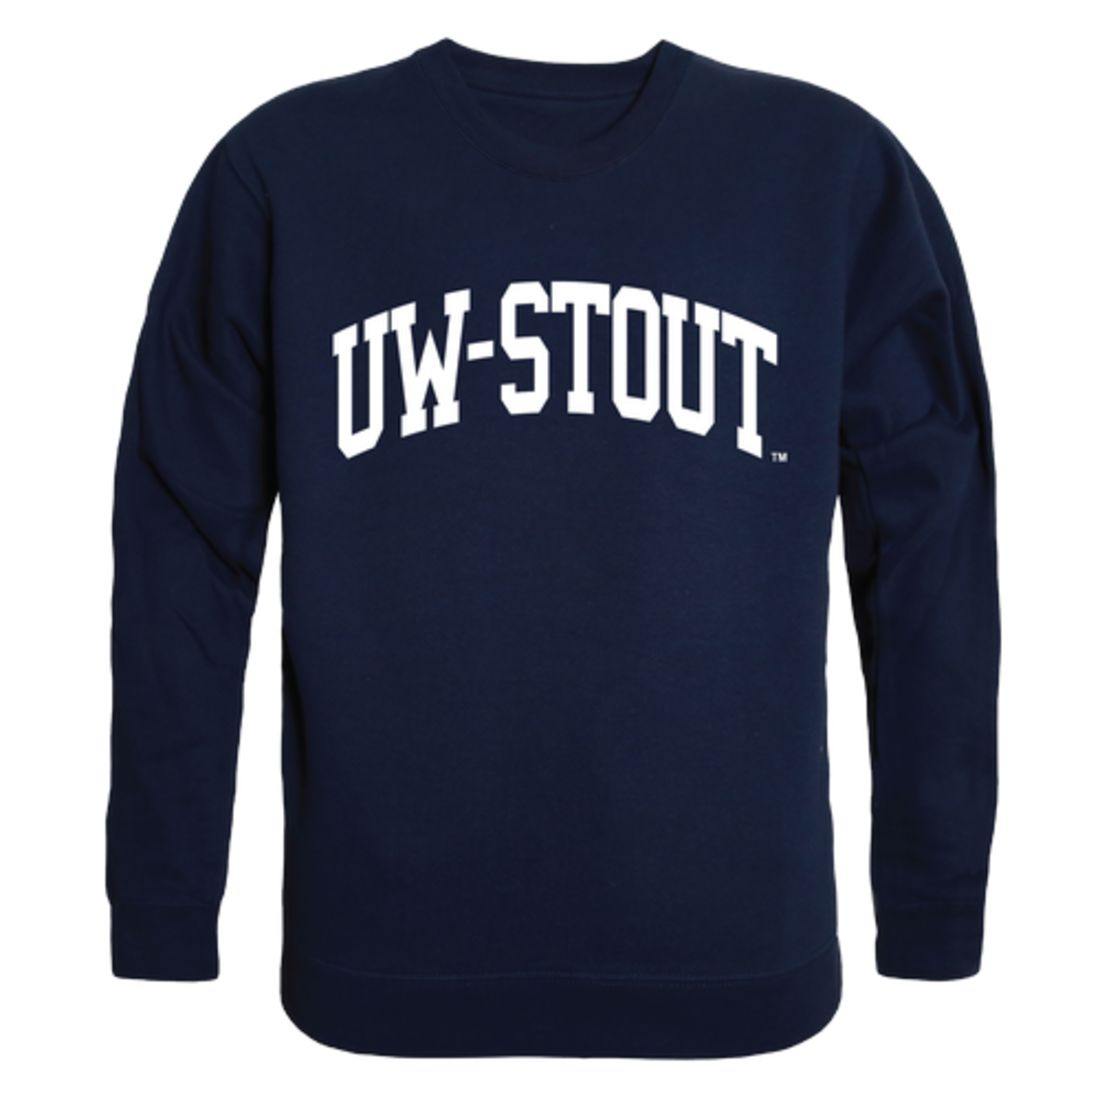 UW Stout University of Wisconsin Blue Devils Arch Crewneck Pullover Sweatshirt Sweater Navy-Campus-Wardrobe